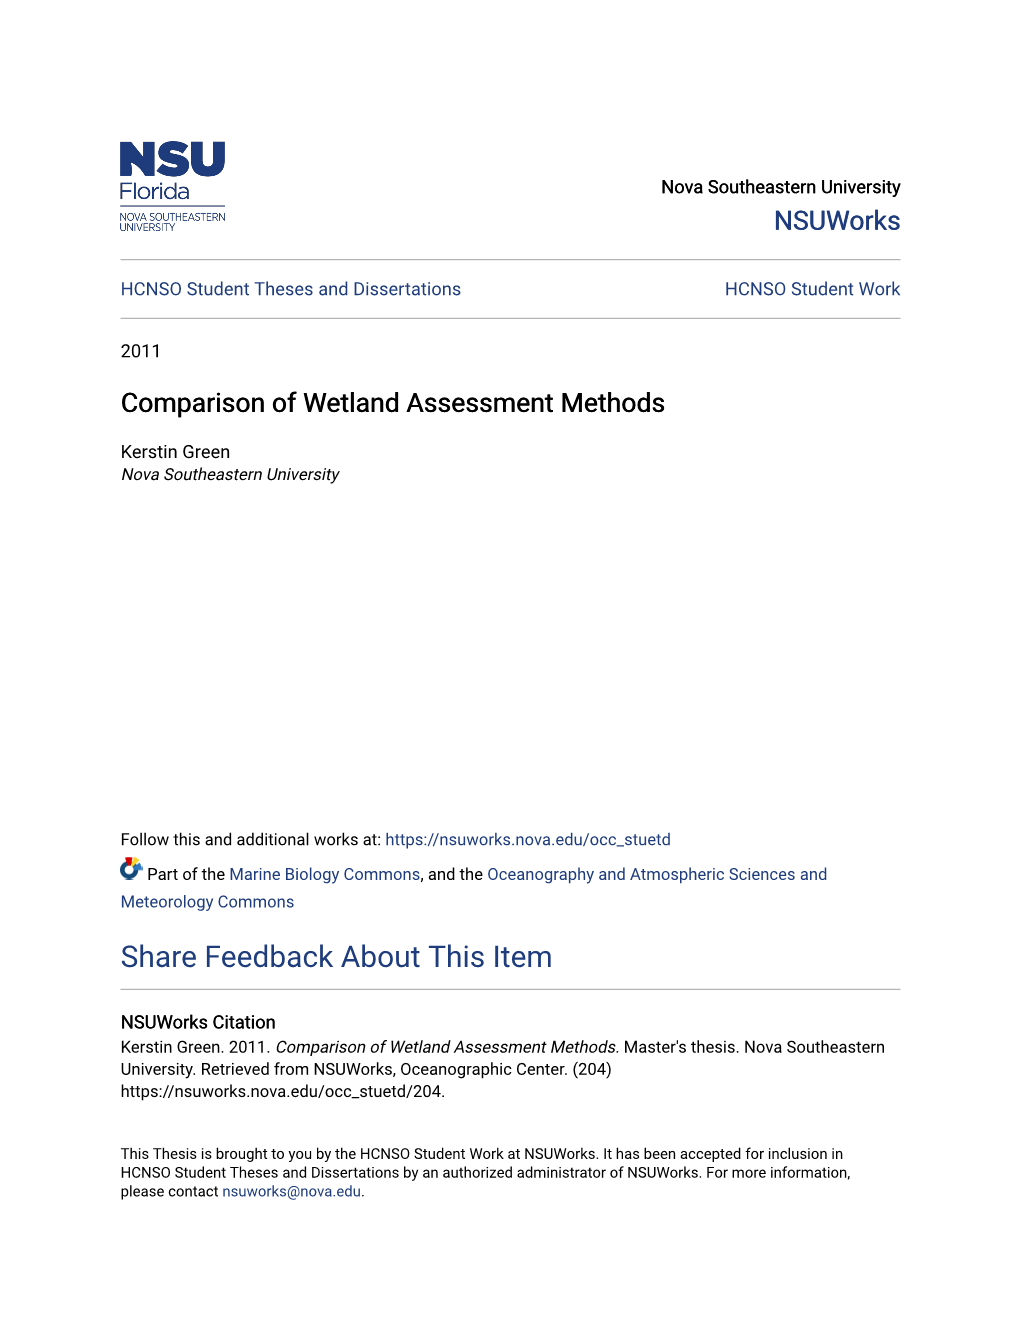 Comparison of Wetland Assessment Methods